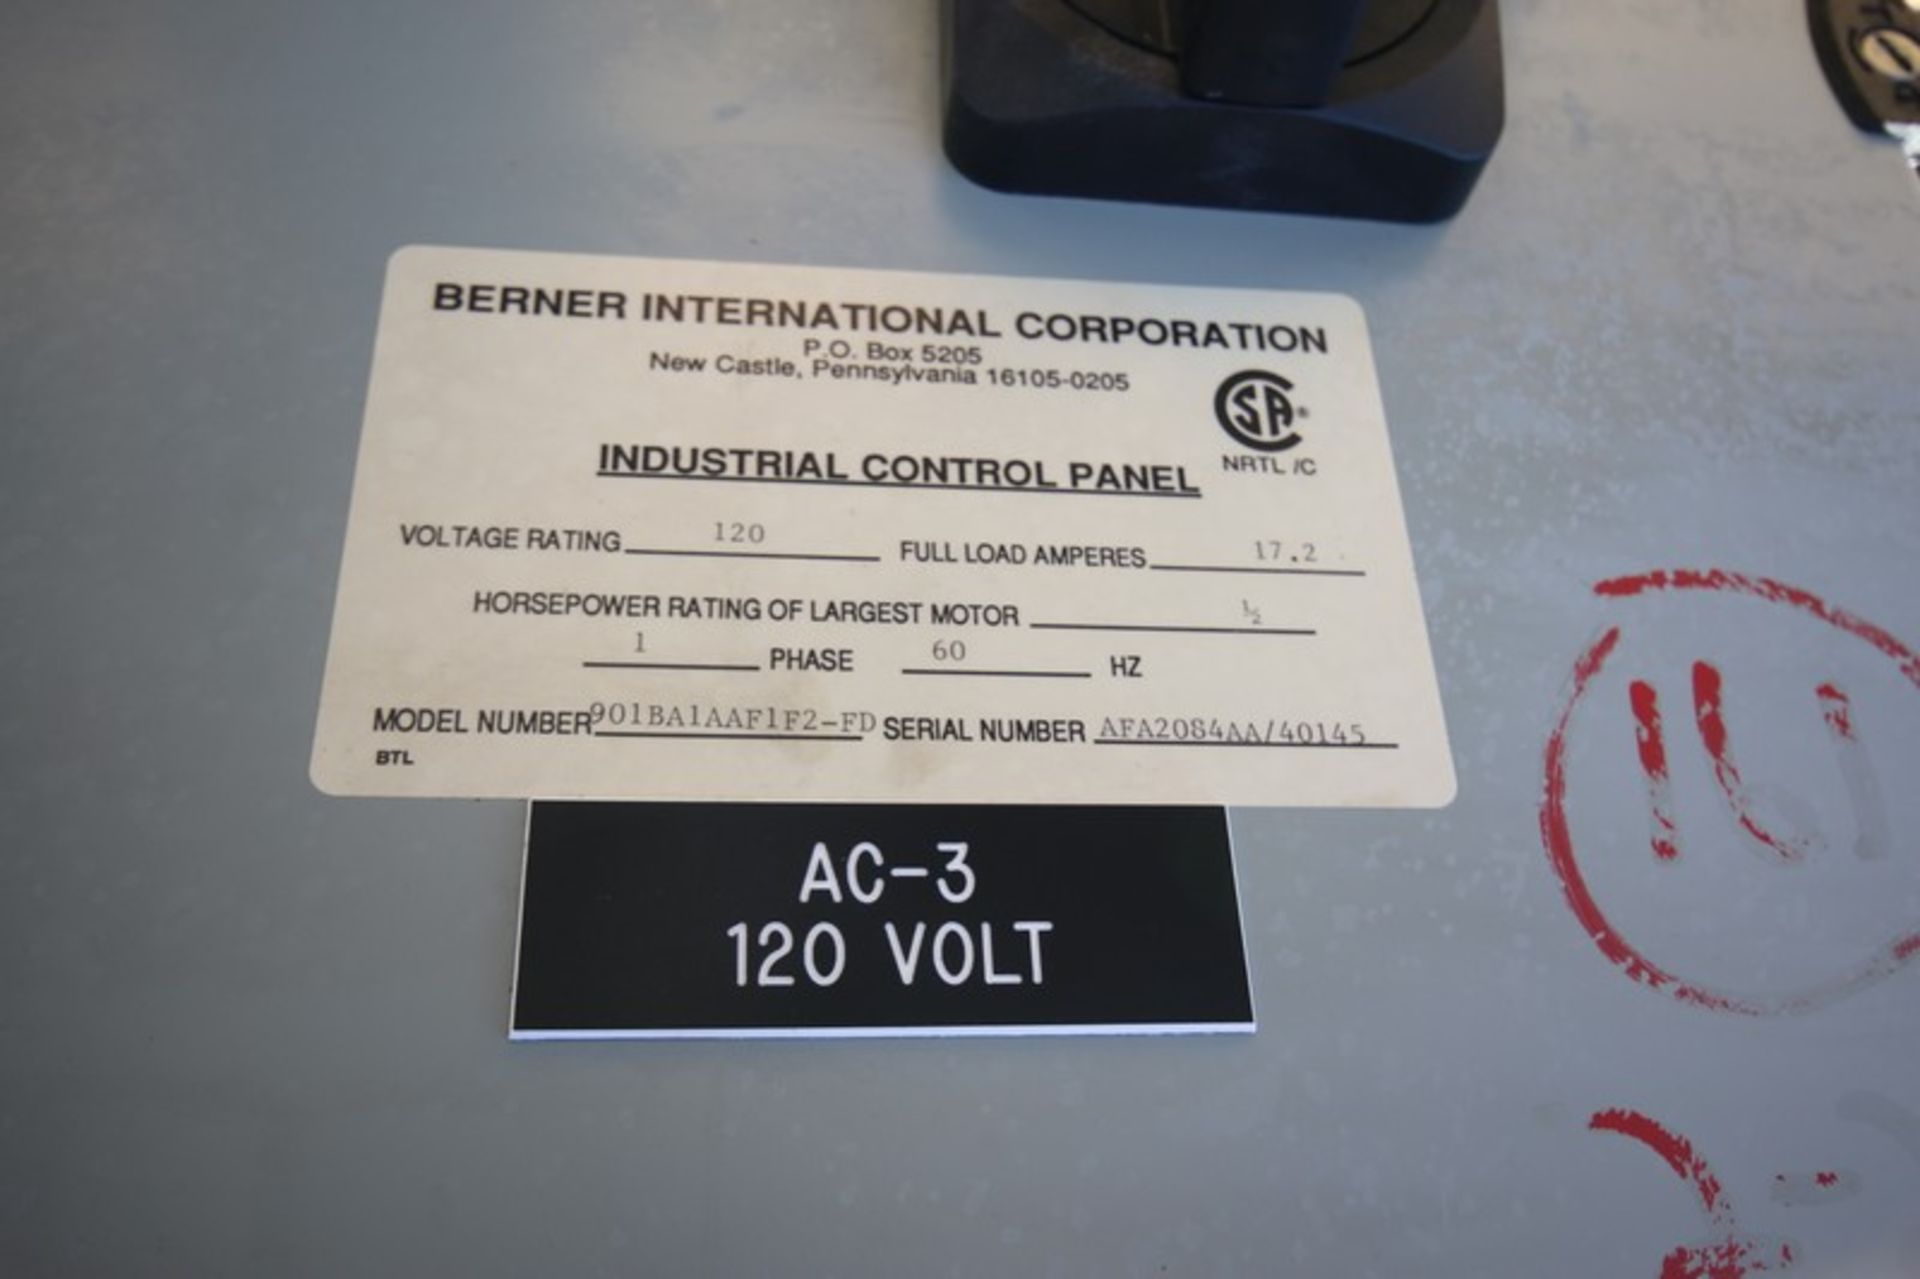 Berner INT. 87" L Air Curtain, Model 901BA1AAF1F2-FD, SN AFA2084AA/40145, 120V (INV#103018) (Located - Image 3 of 3